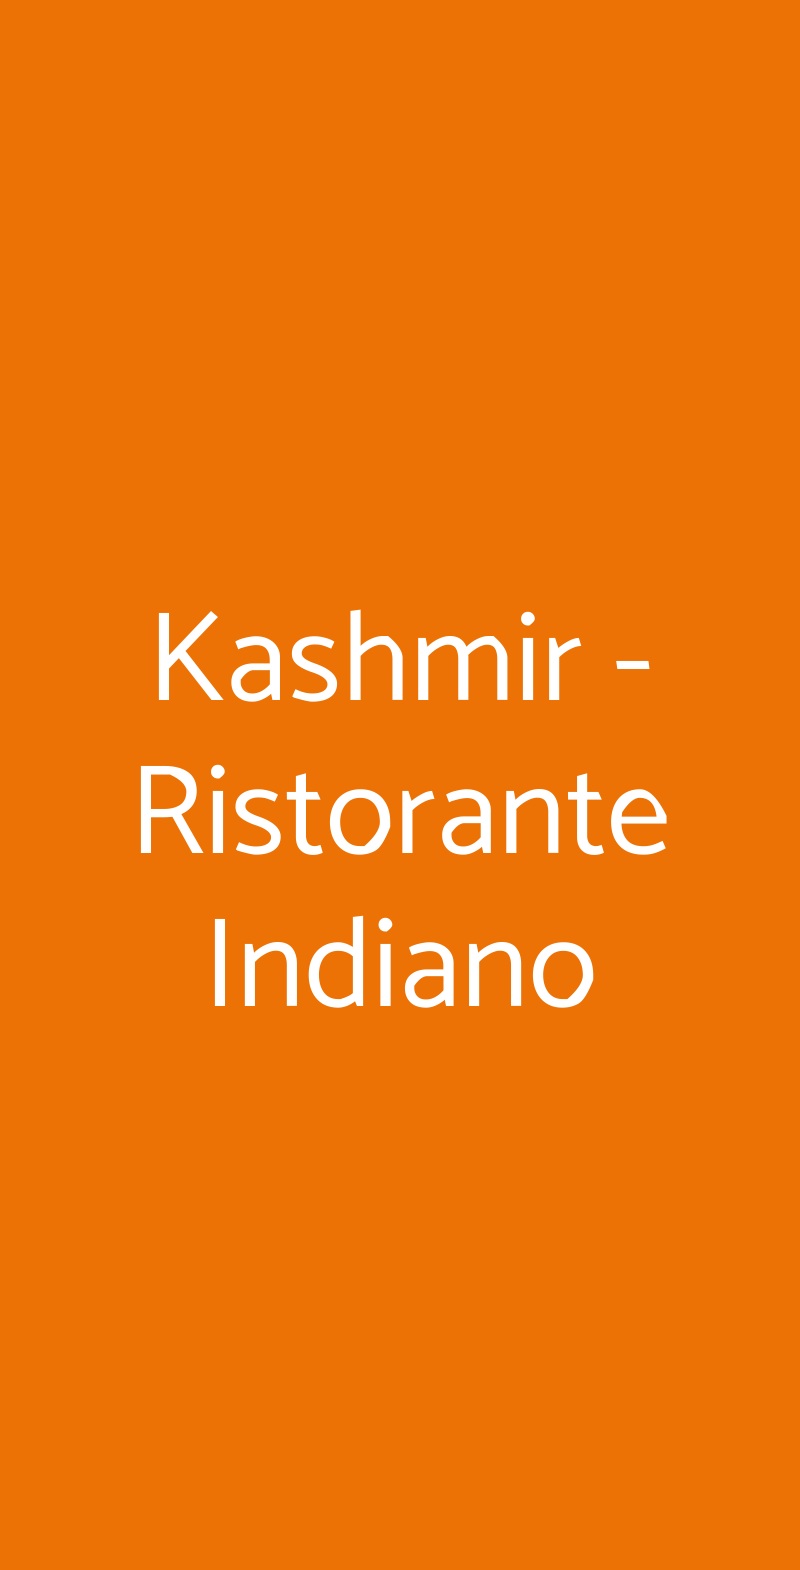 Kashmir - Ristorante Indiano Milano menù 1 pagina